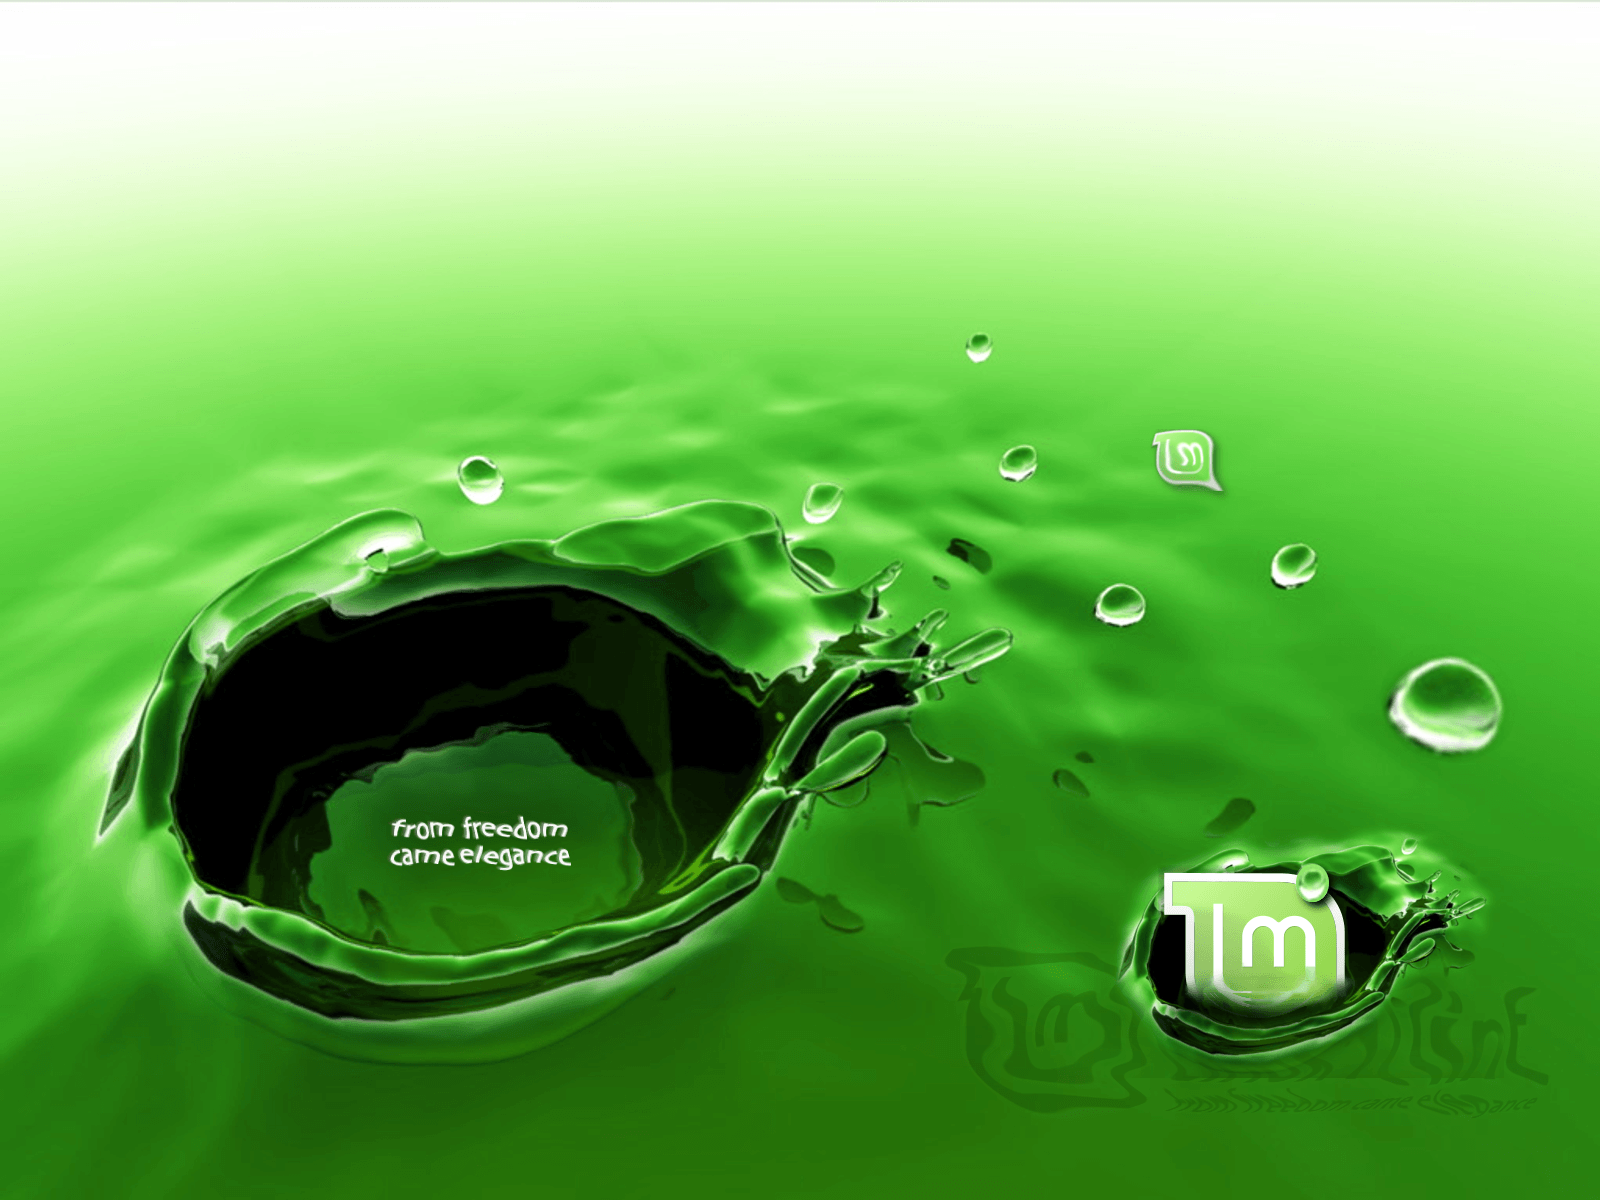 Nuevo fondo de pantalla Mint Splash * ACTUALIZADO * - Linux Mint Forums